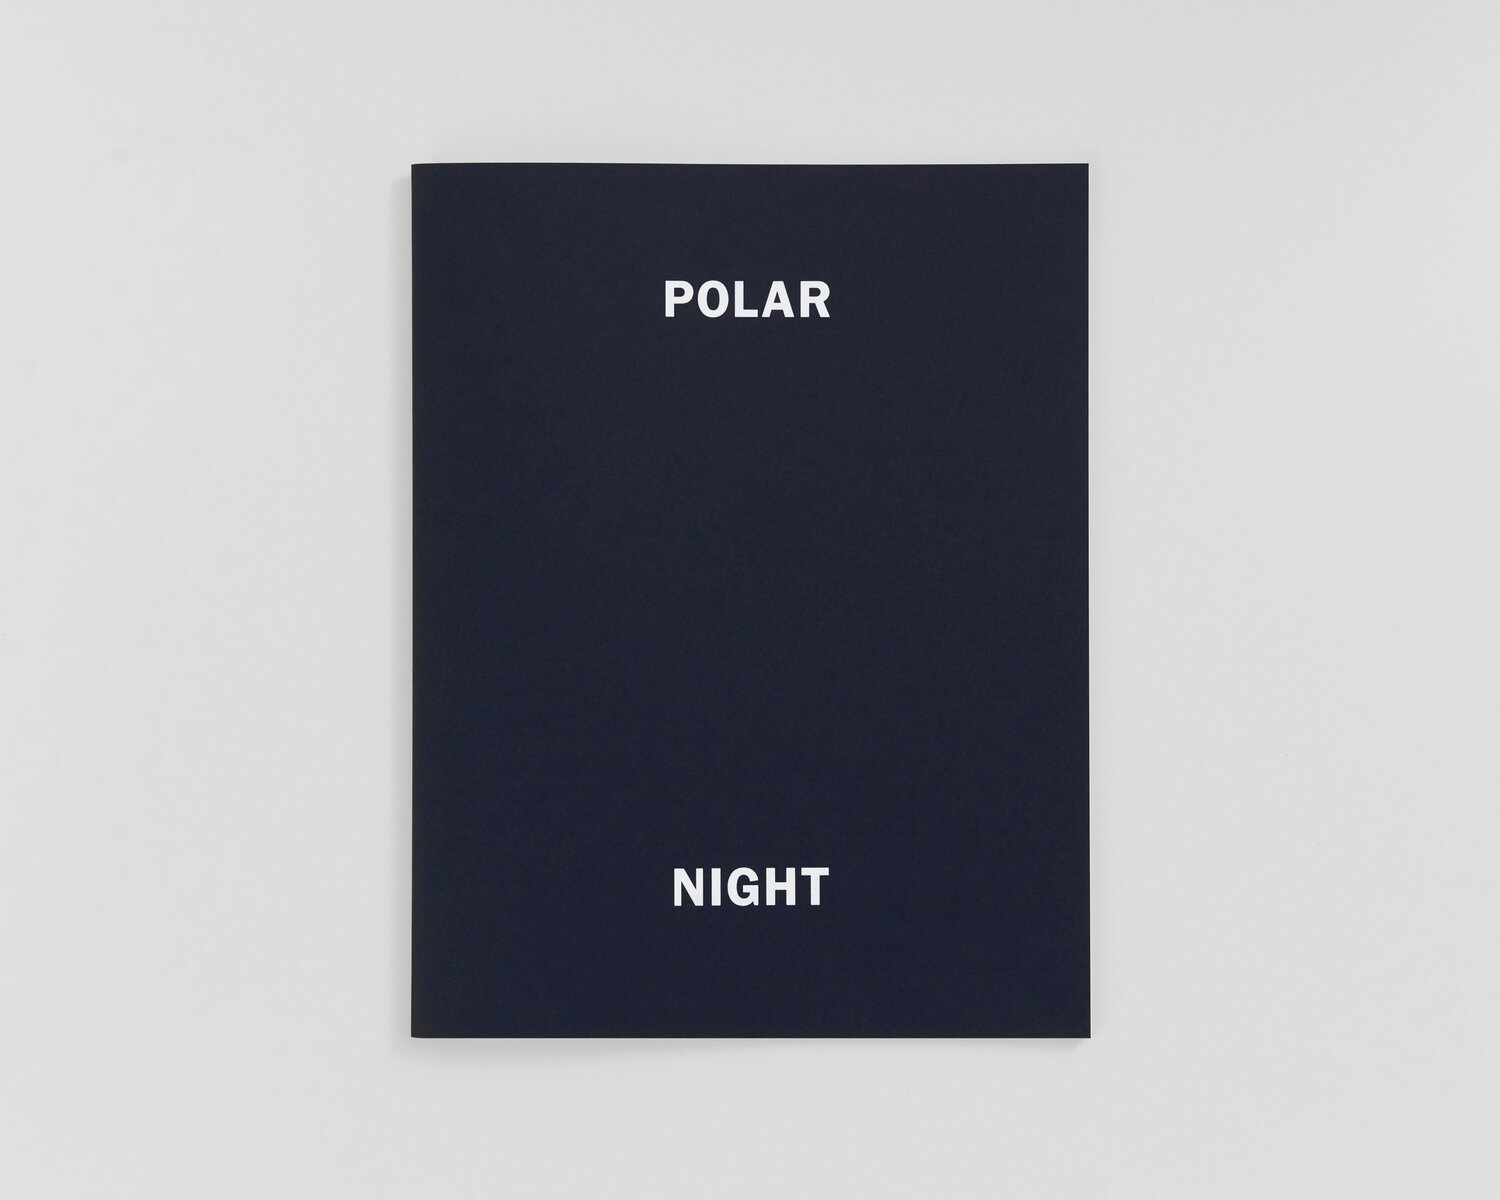 "Polar Night" published by Trespasser